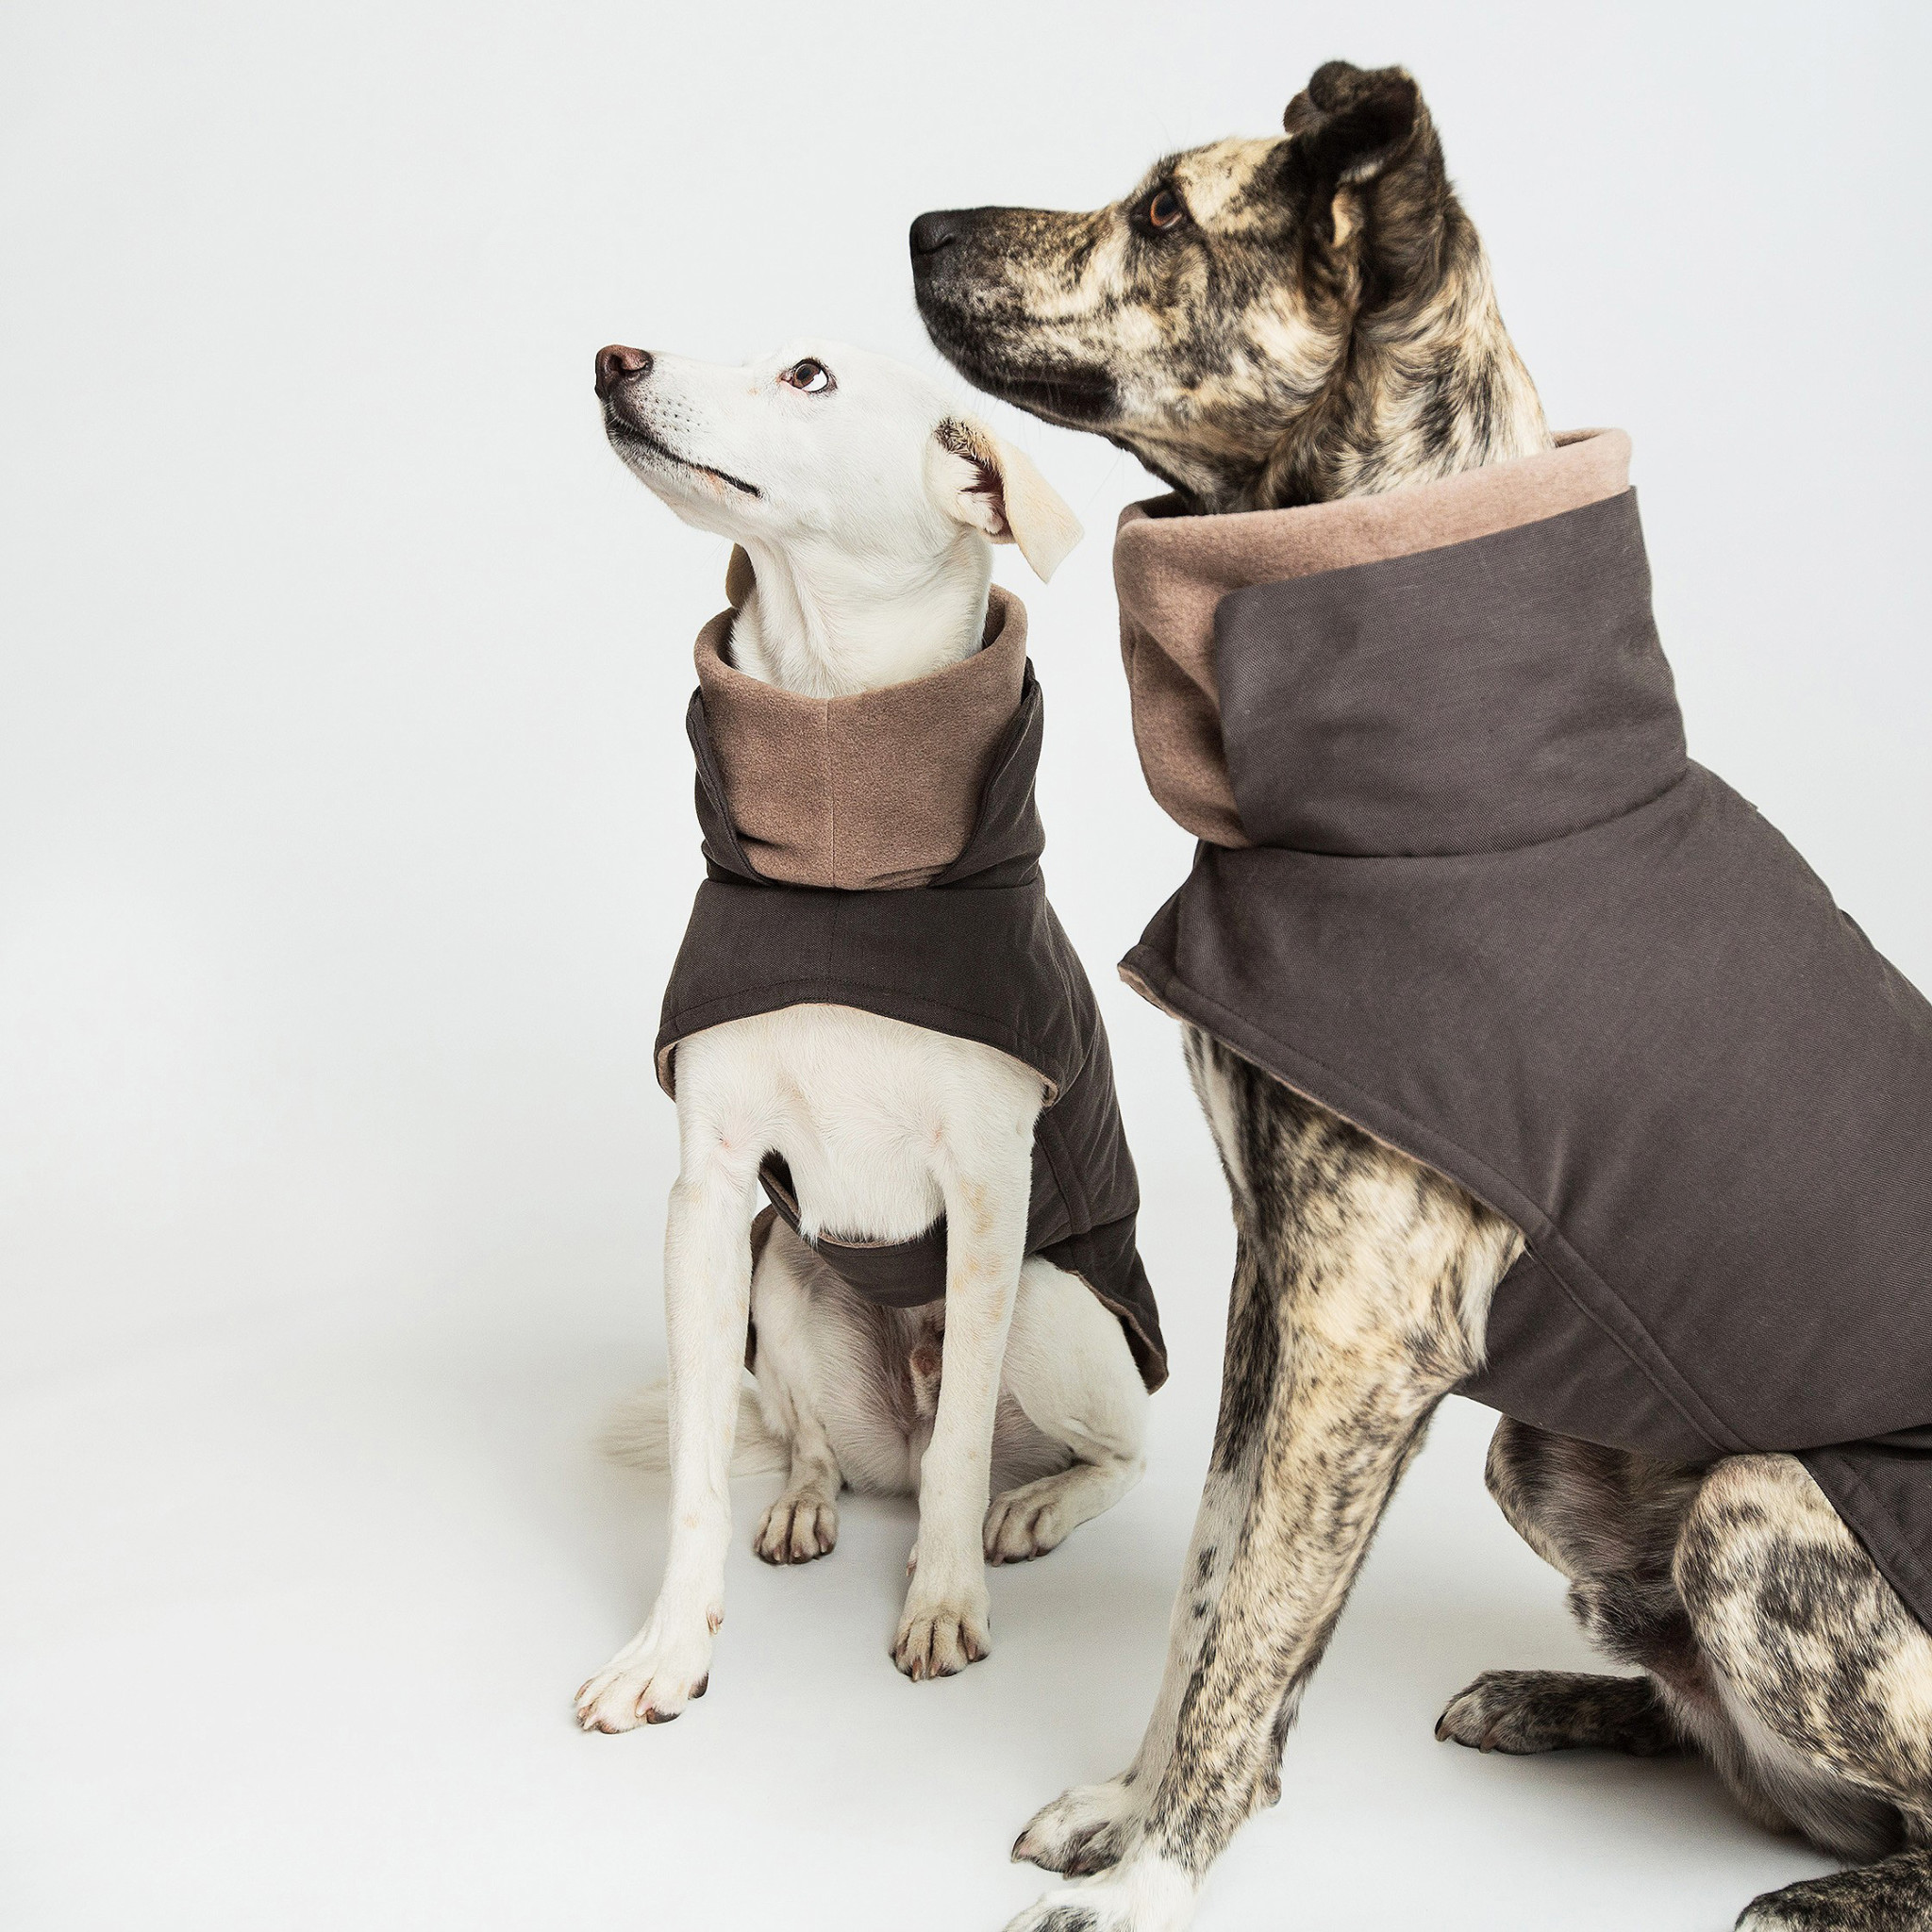 Brooklyn Waxed Cotton Dog Coat from Cloud7